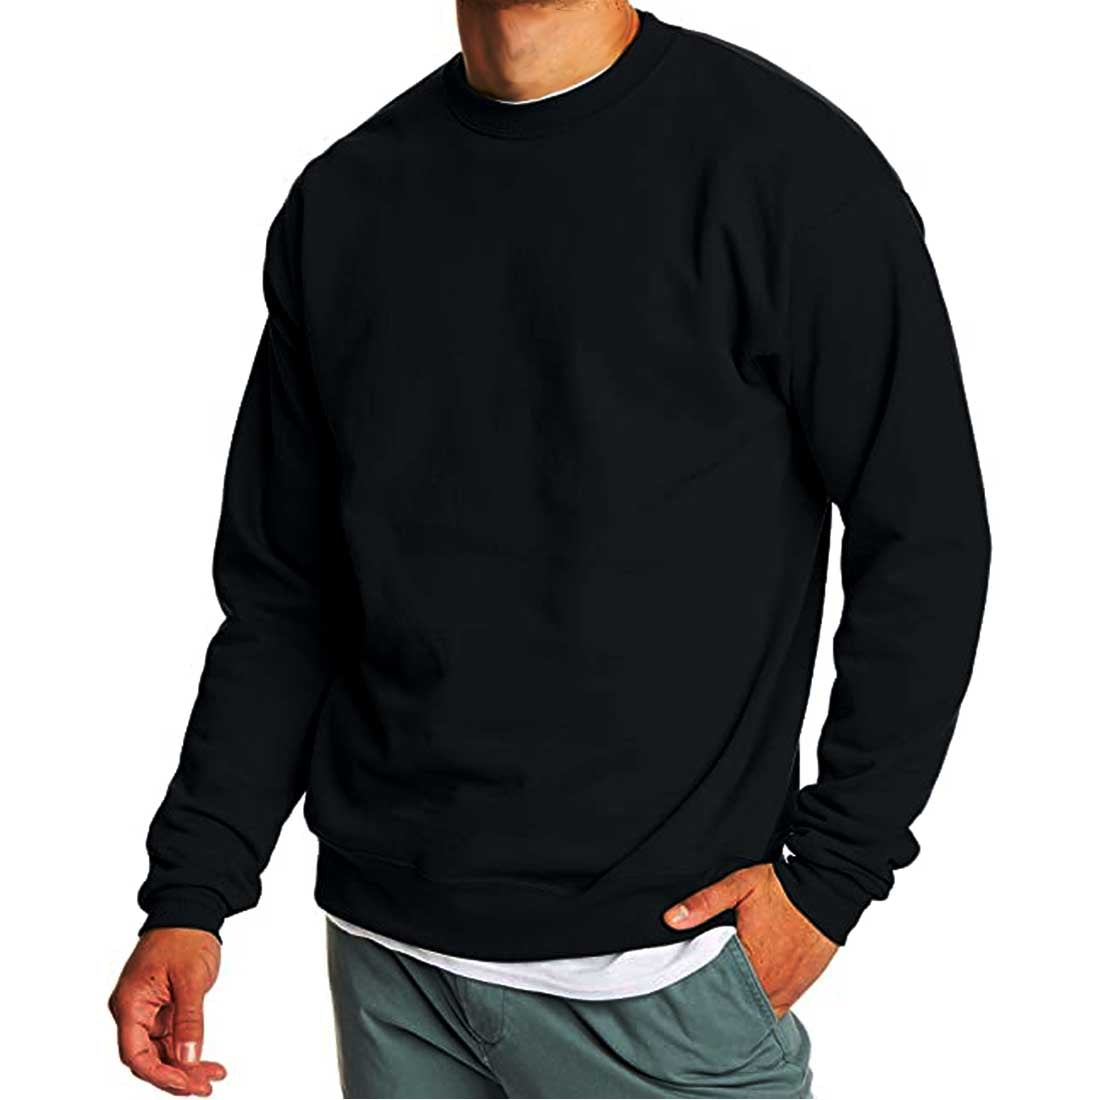 Printed Custom Unisex Sweatshirt Round Neck - Add Initials